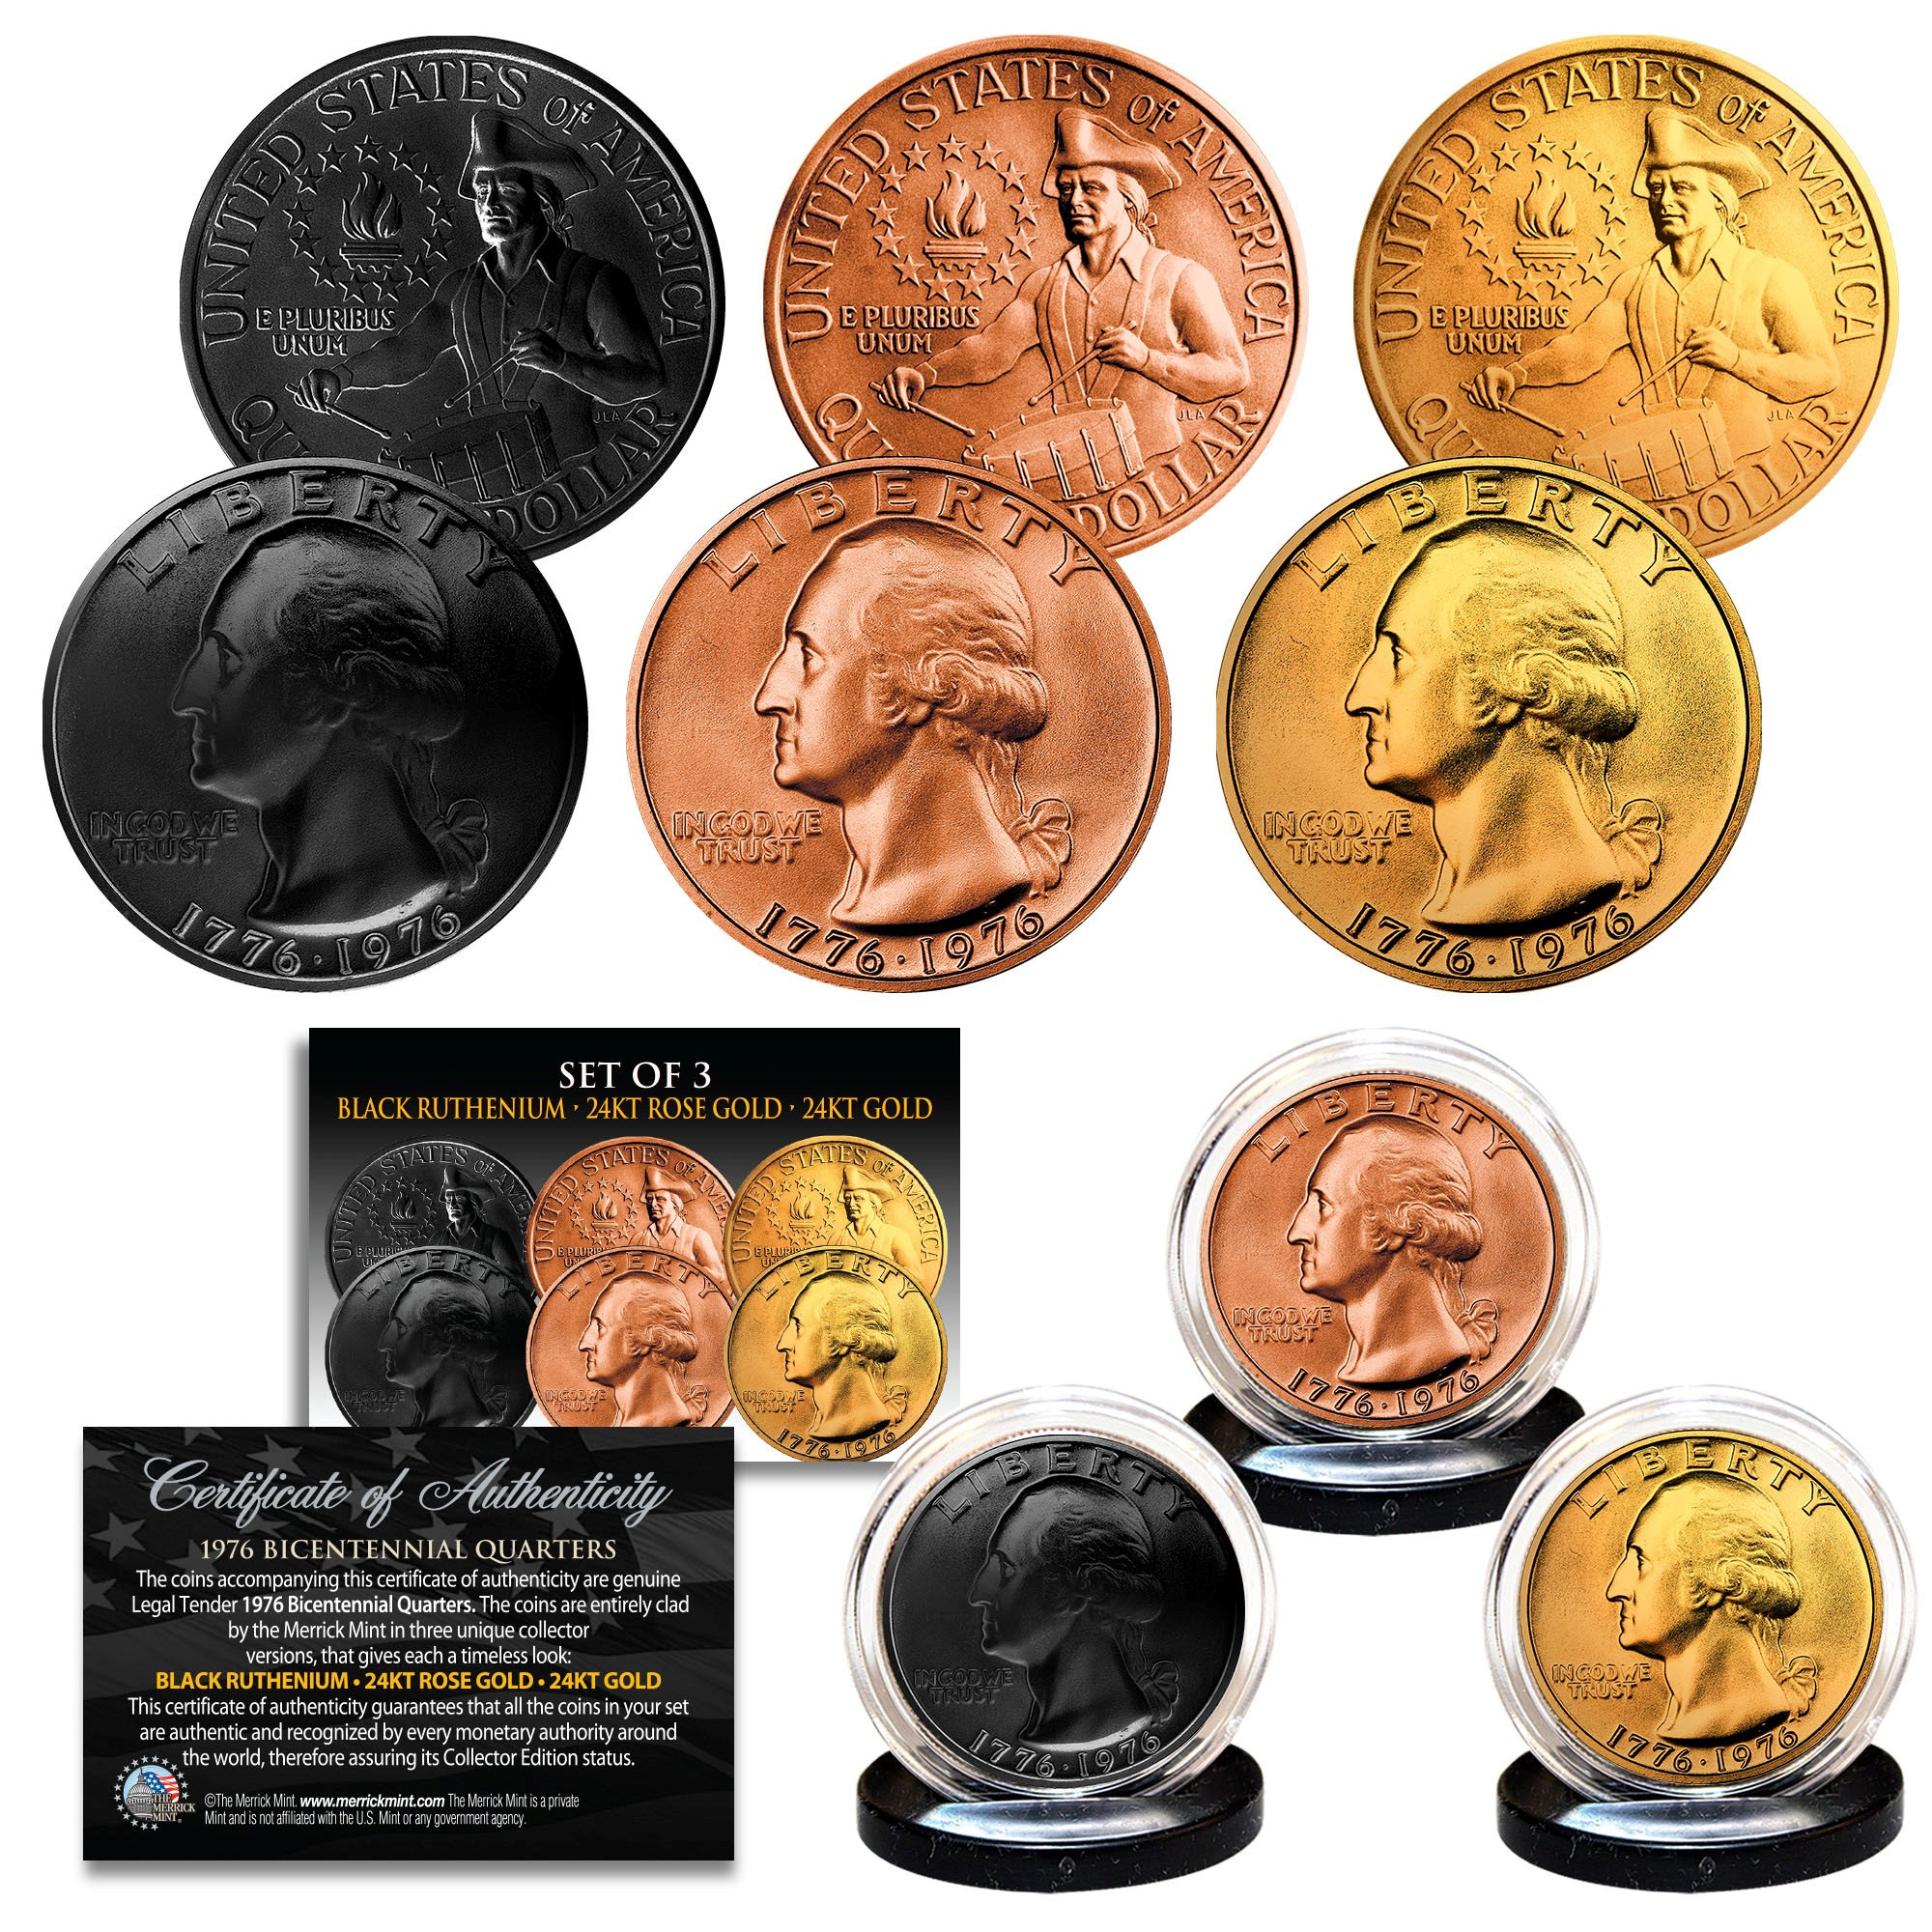 Lot of 3 Various Full Date BUFFALO NICKELS US Coins - Genuine ROSE GOL –  Merrick Mint